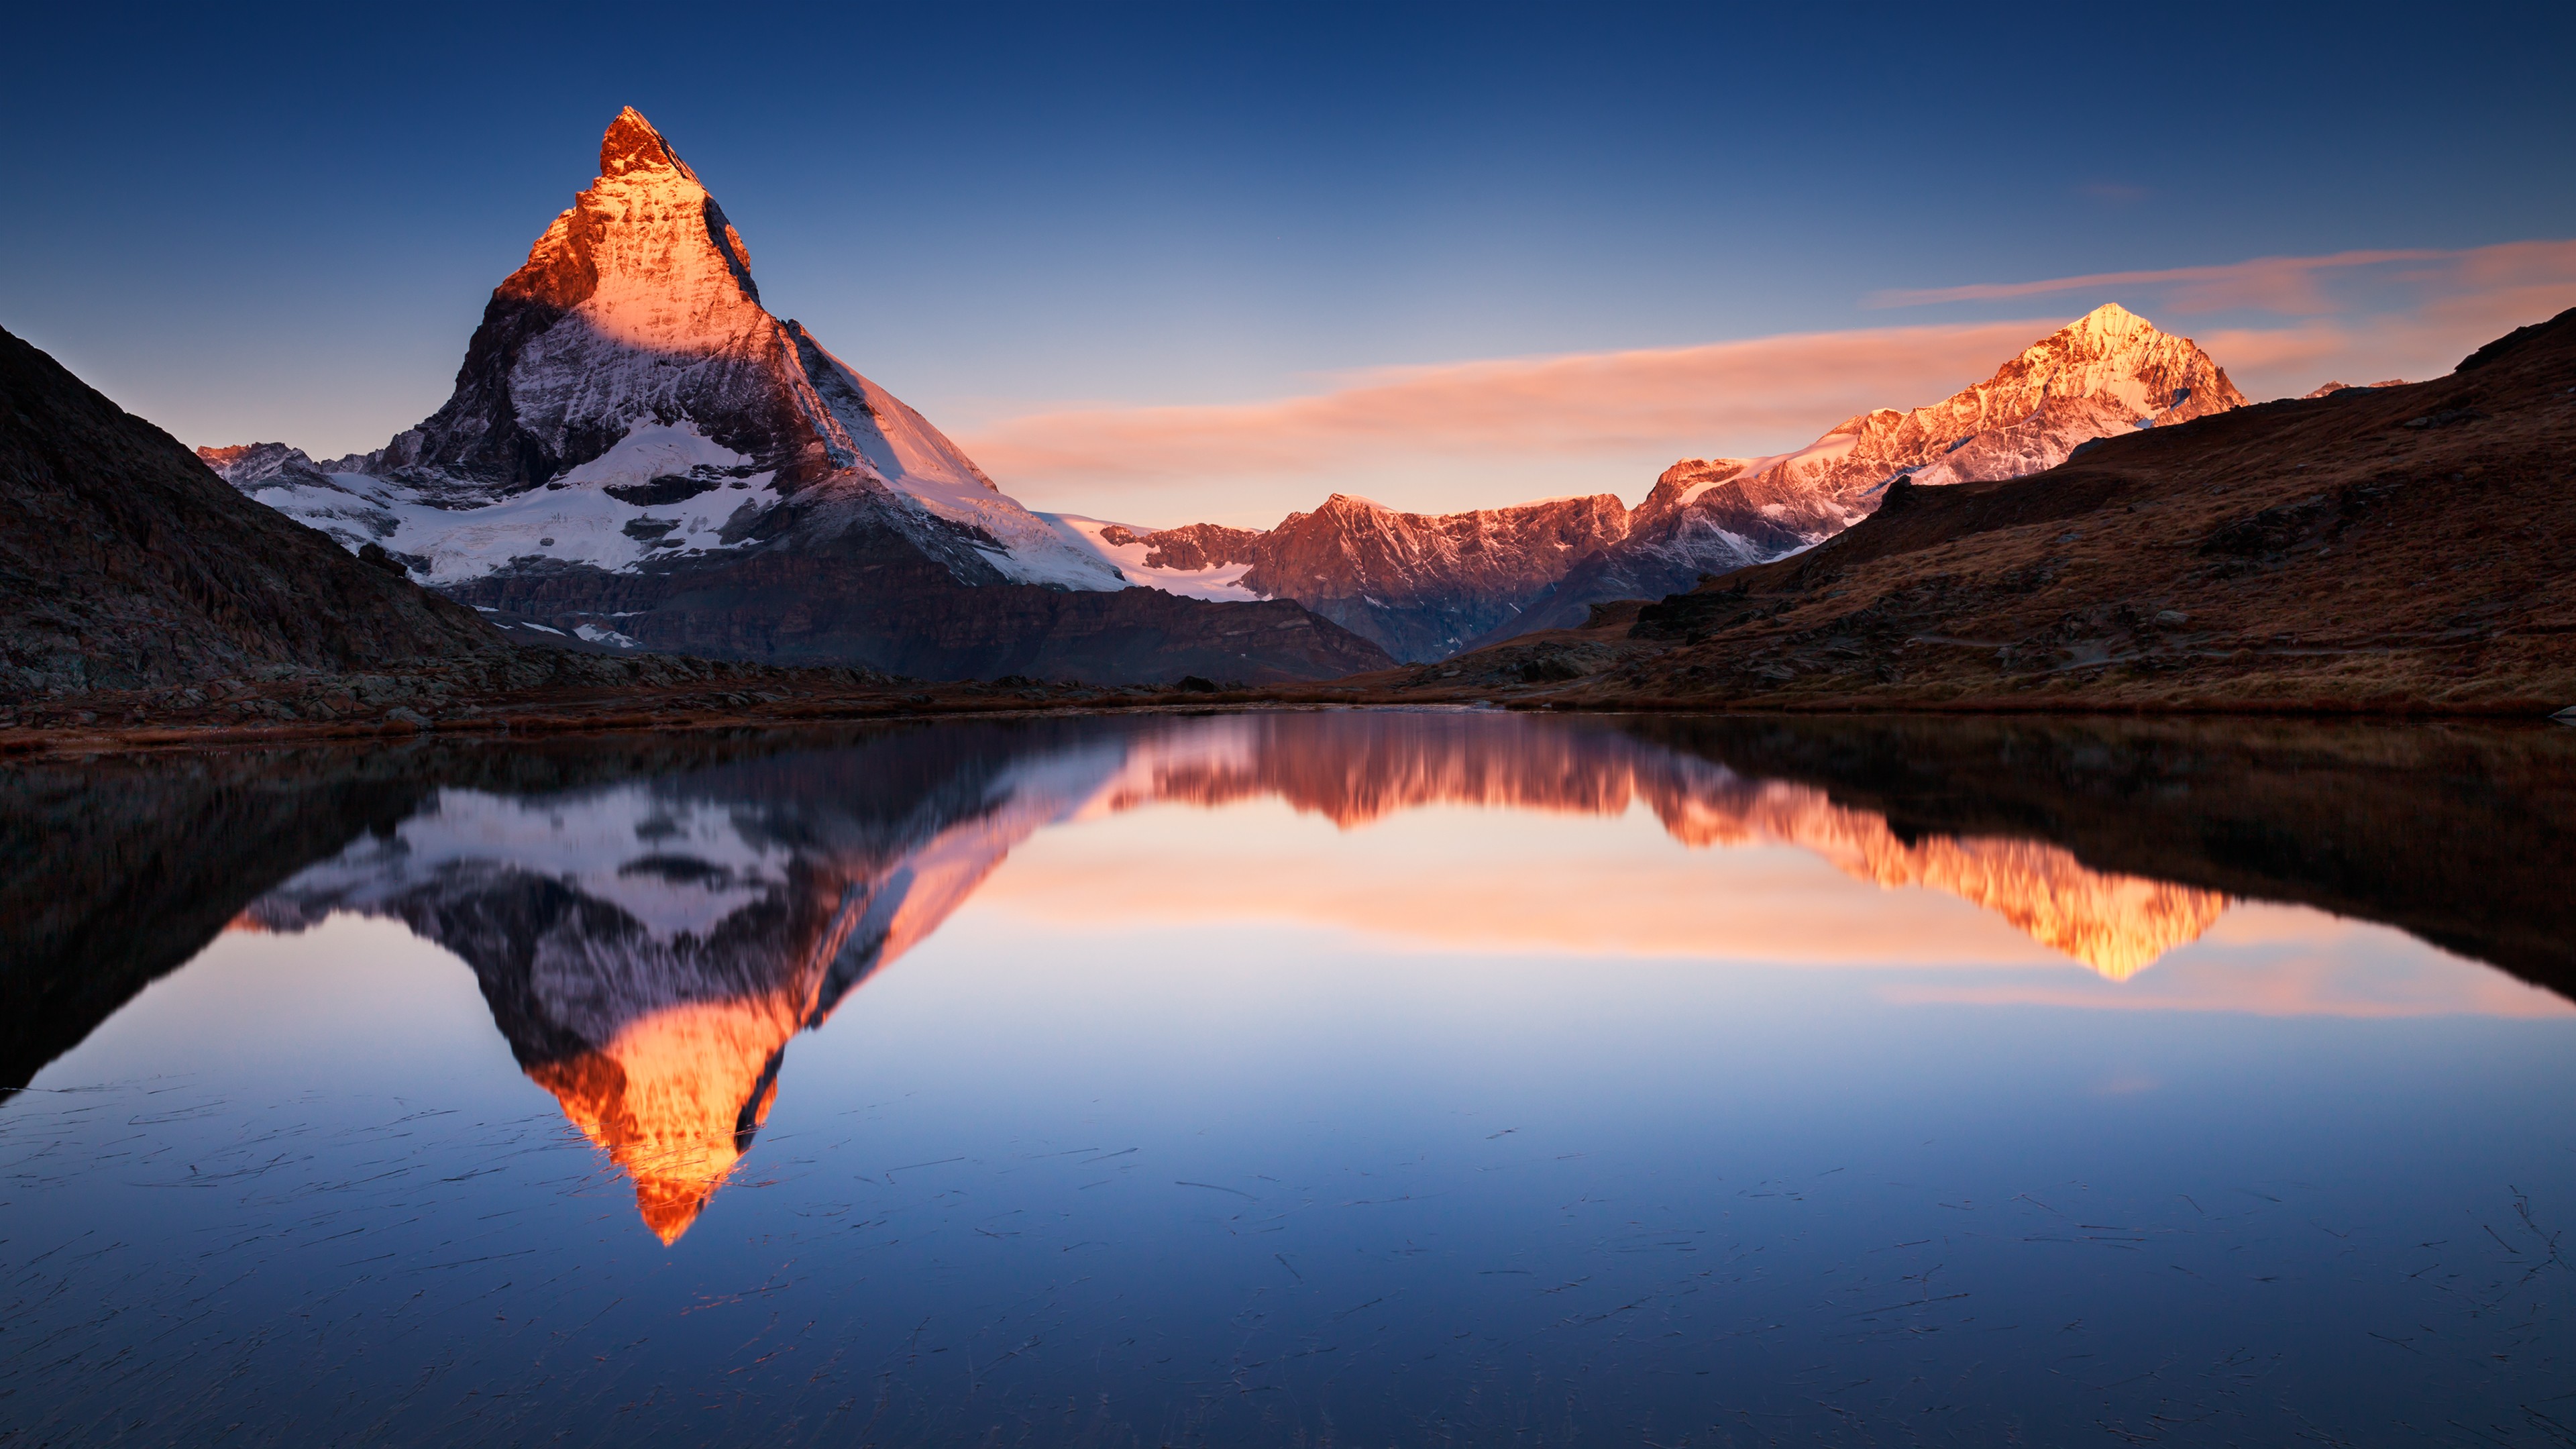 General 3840x2160 landscape nature lake reflection Matterhorn snowy peak Alps calm waters Swiss Alps Switzerland